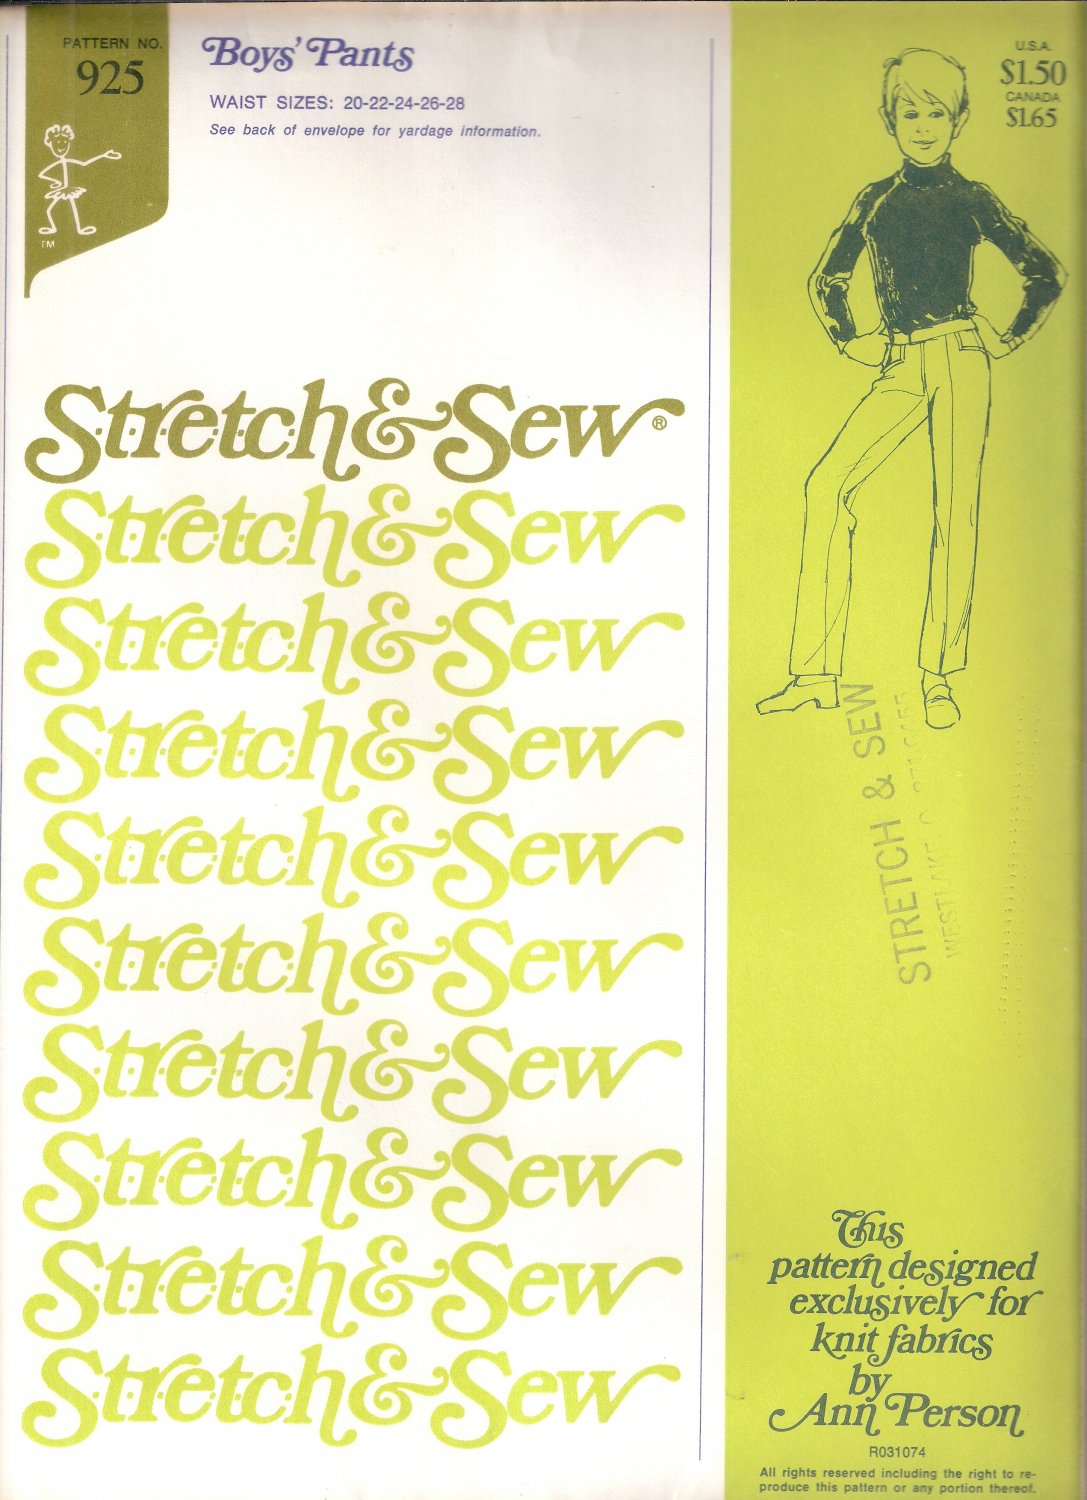 Stretch & Sew 925 Boys' Pants Sewing Pattern Sizes Waist 20 - 28 Ann Person stretch knit fabric